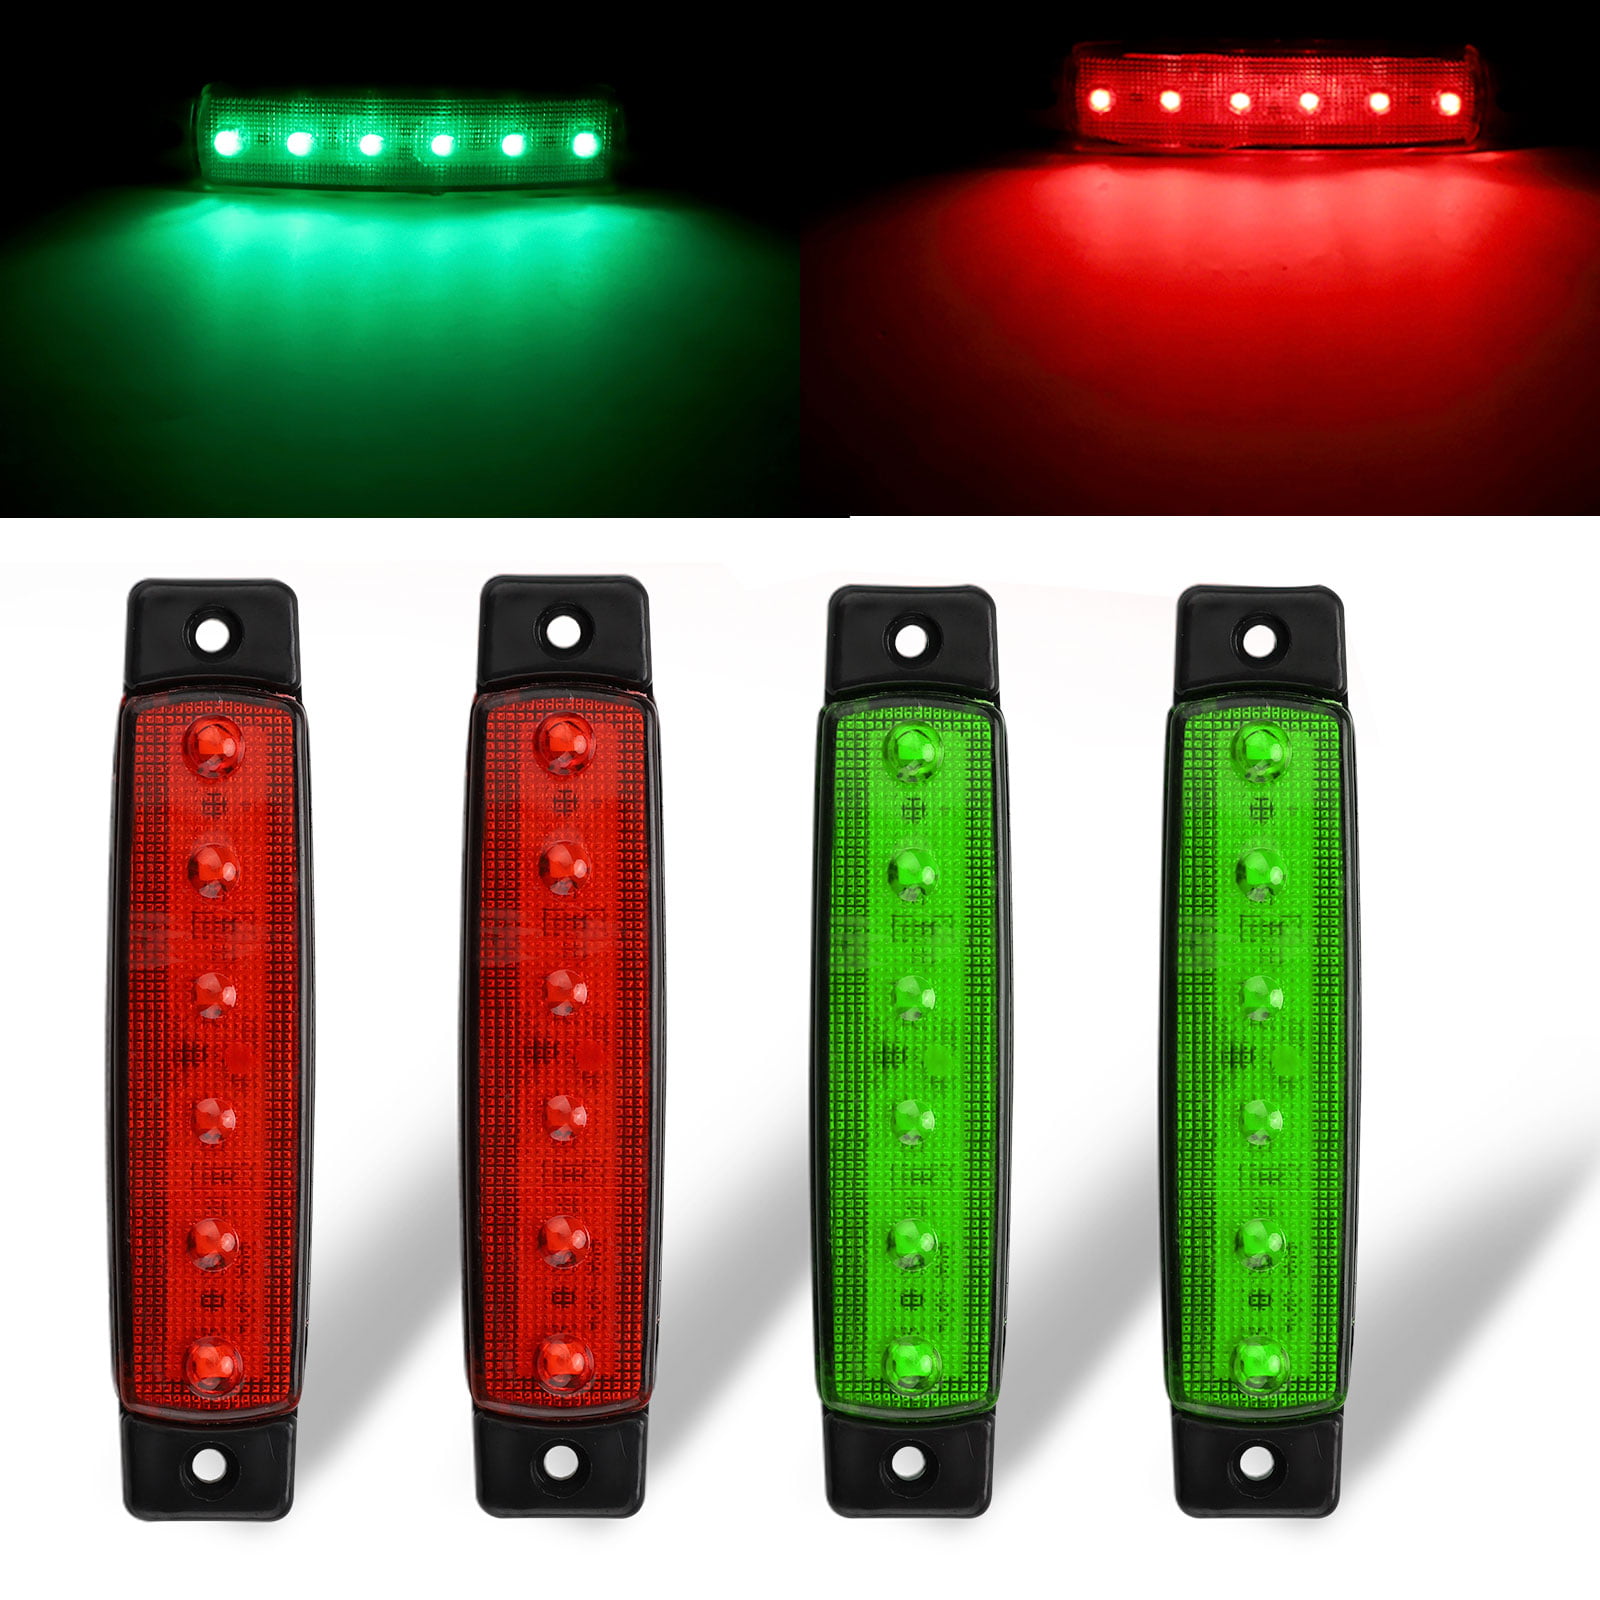 Led Red And Green Navigation Boat Light Strips Hittbydesign